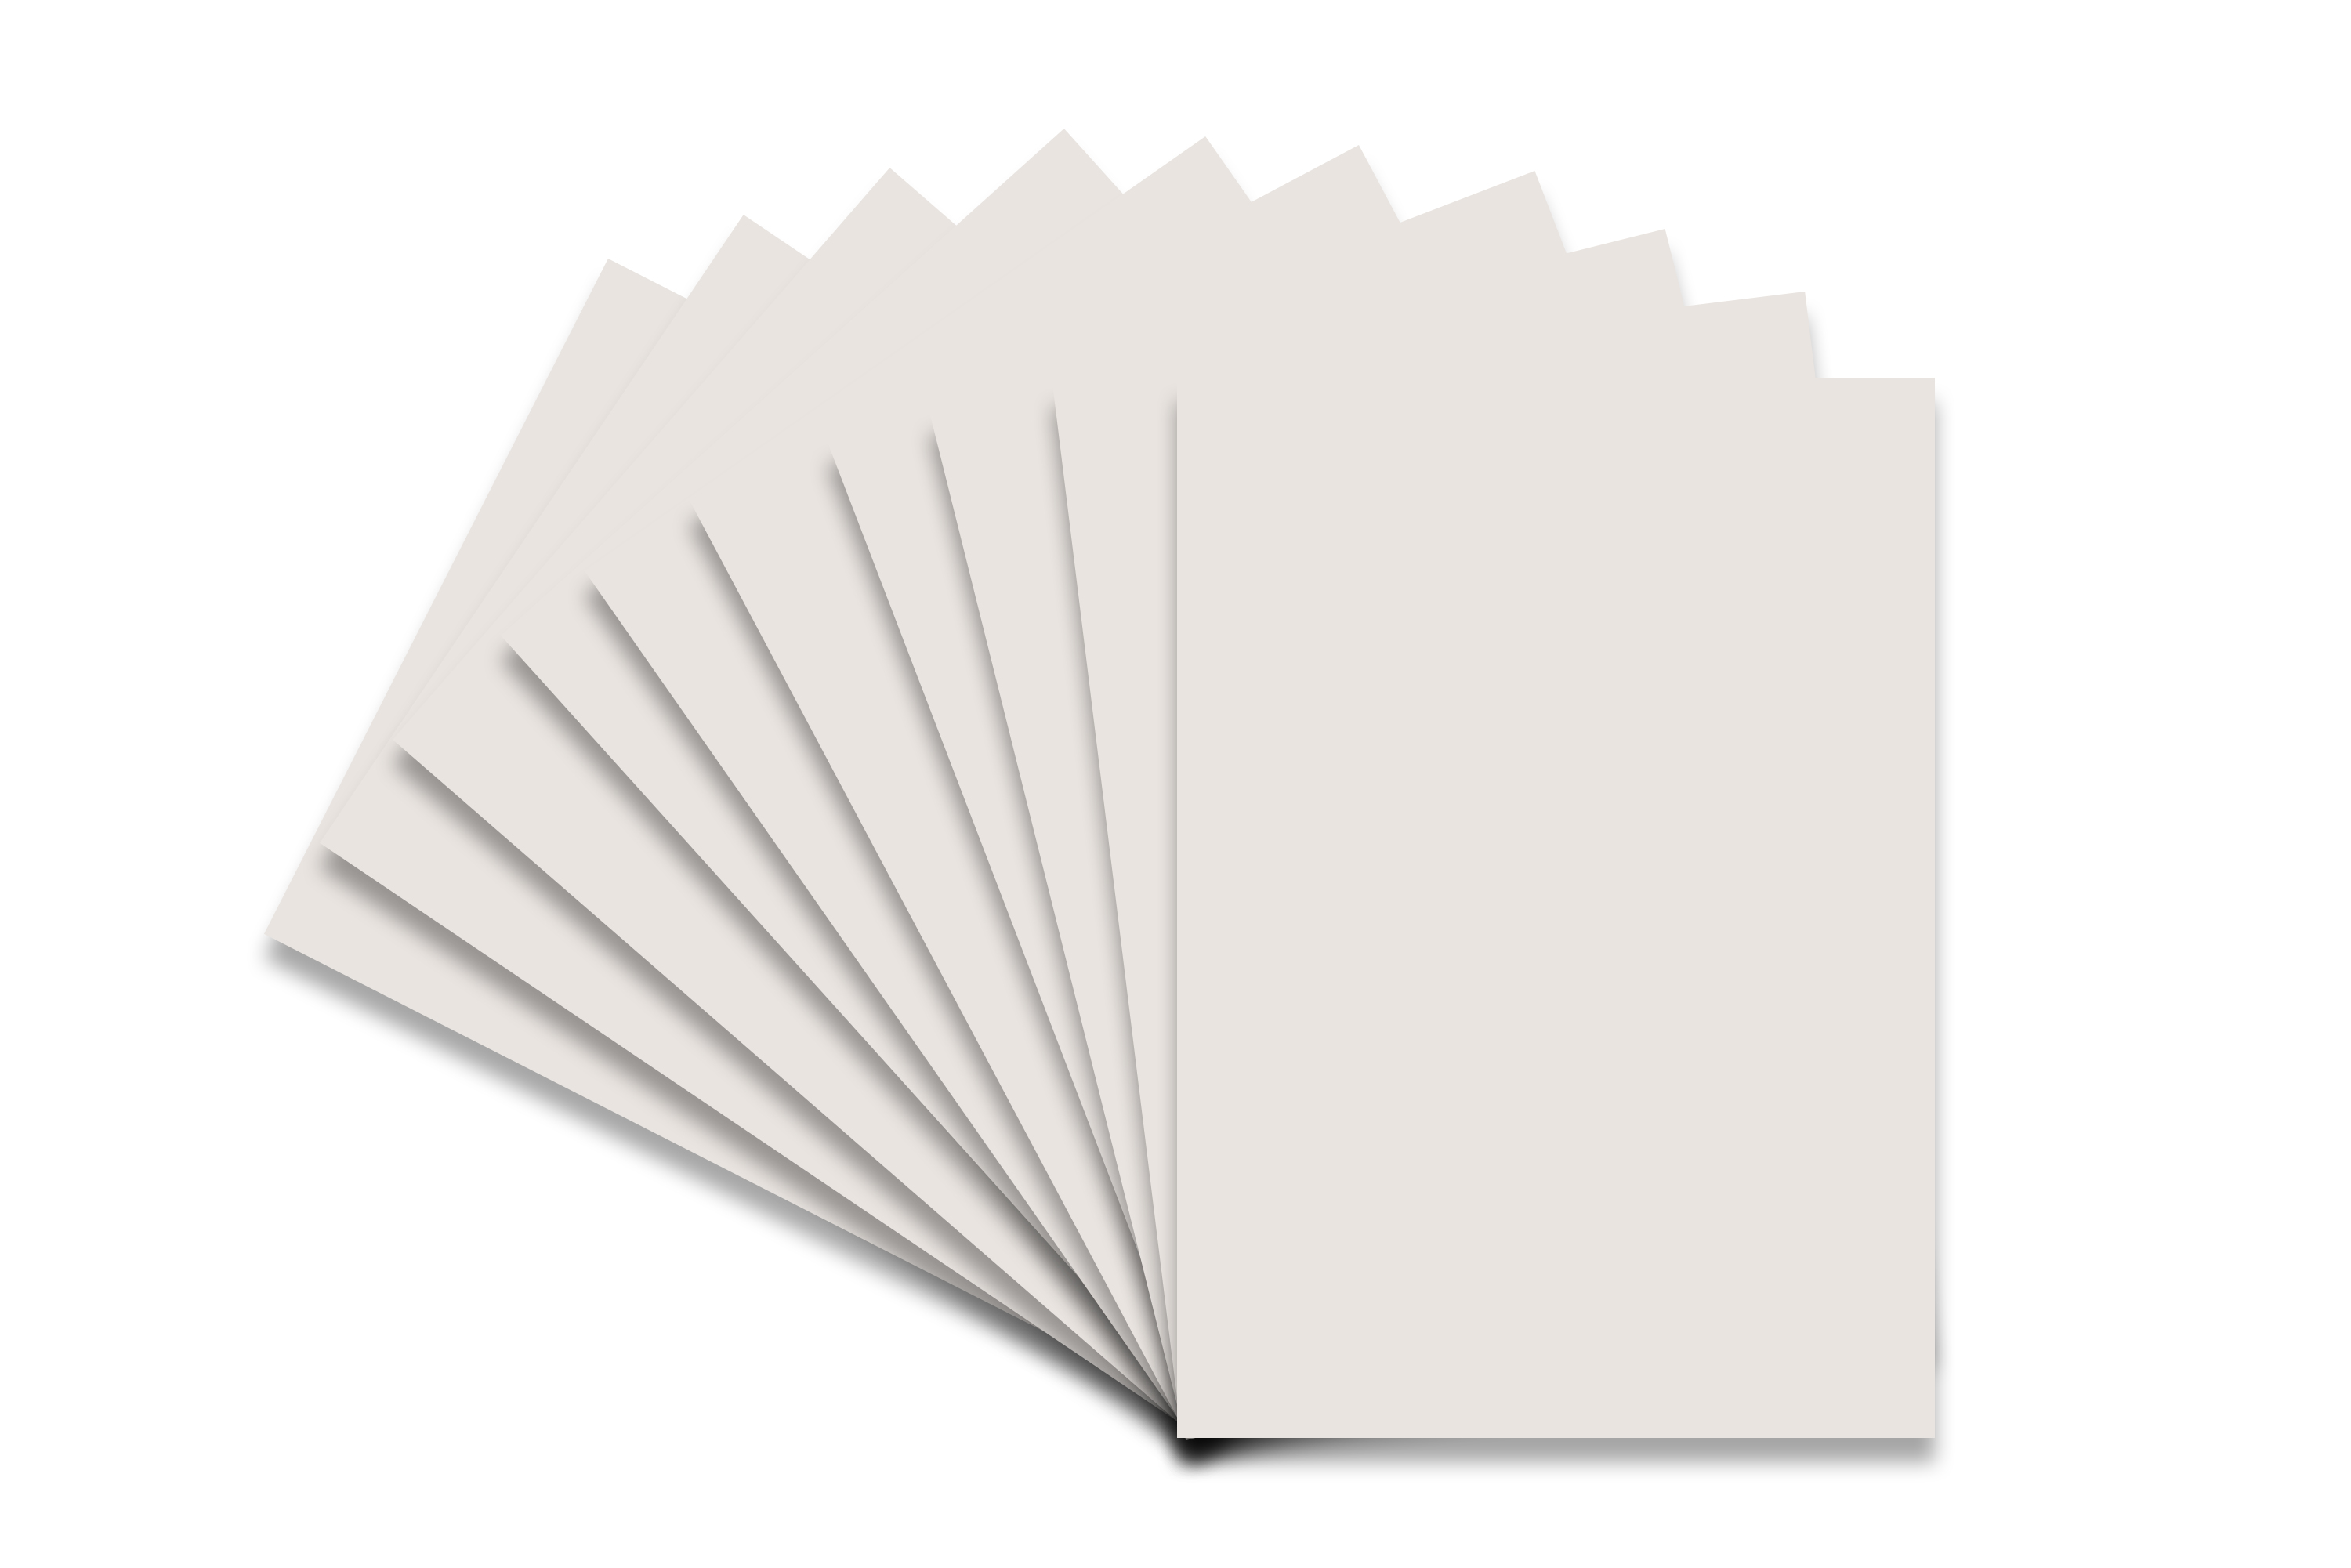 Textured White 16x20 Backing Board - Uncut Photo Mat Board